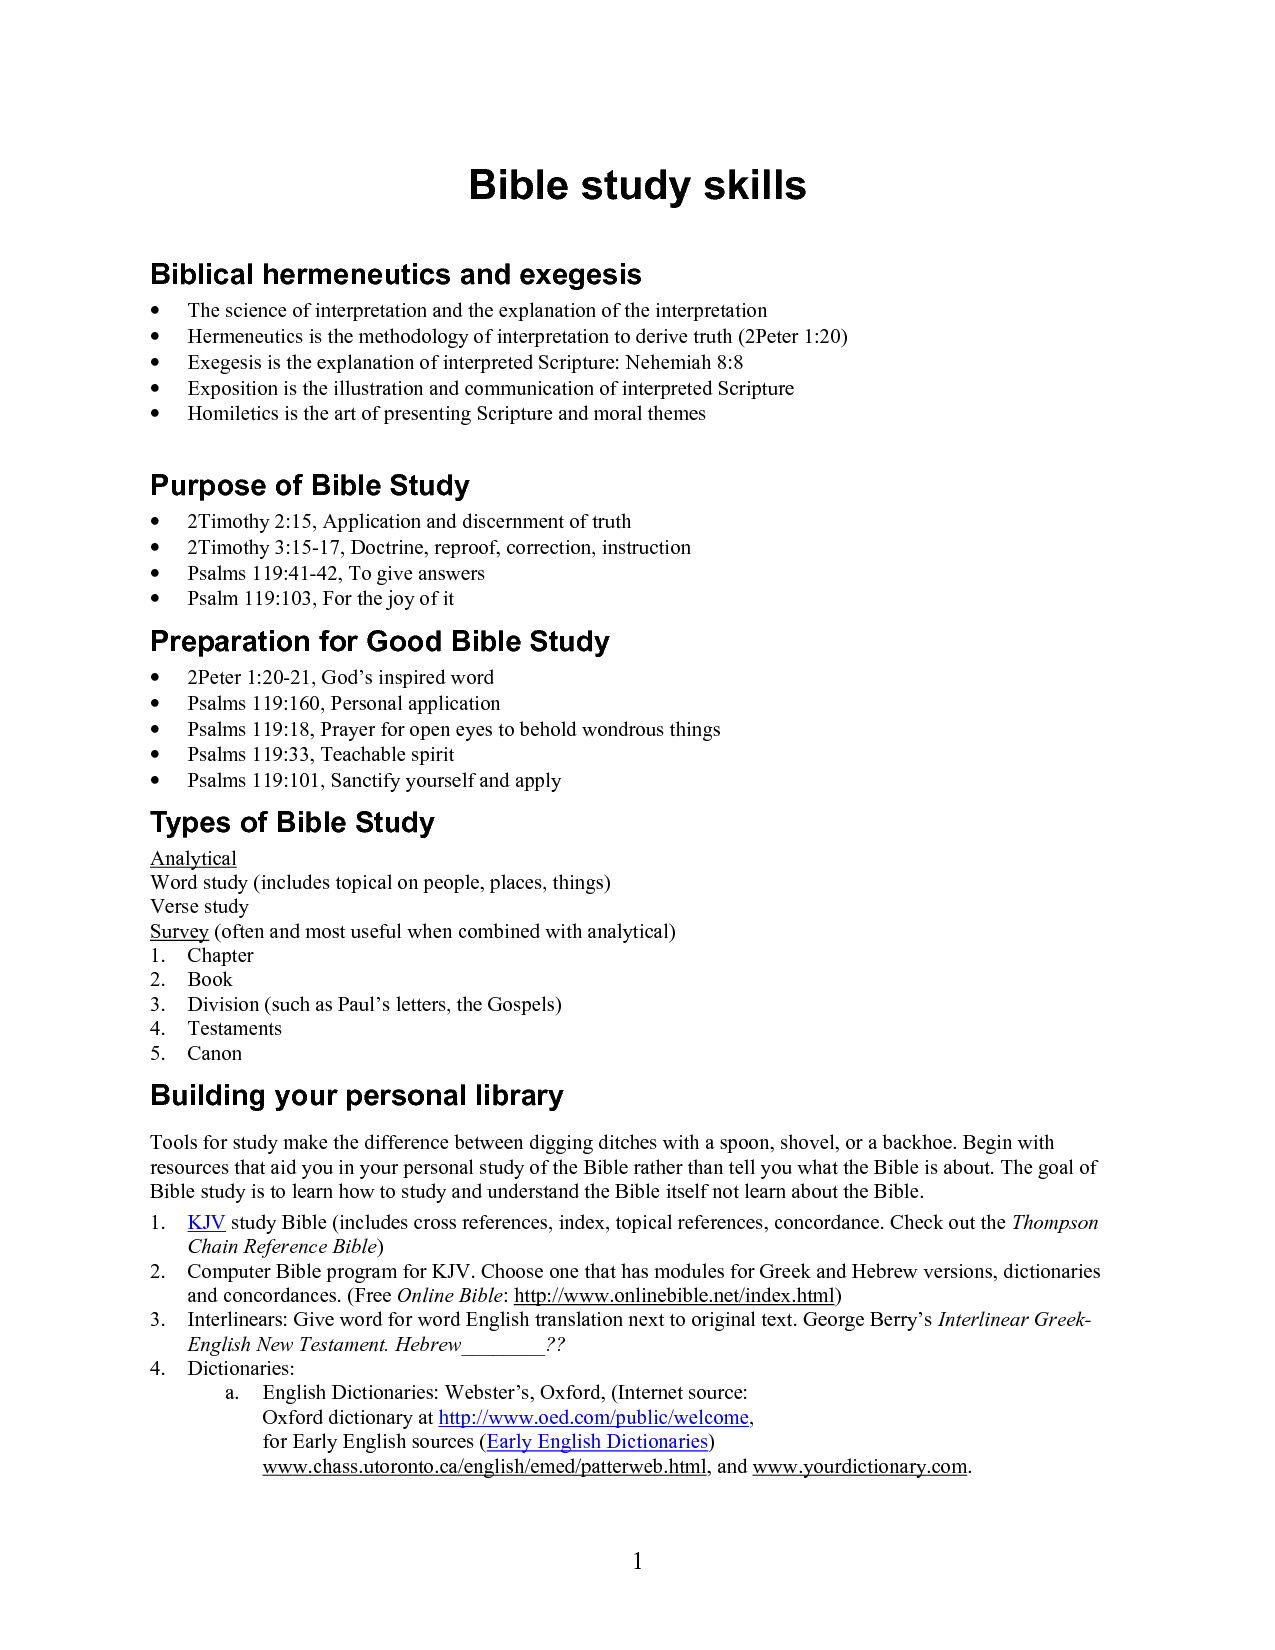 Free Printable Bible Study Lessons Image